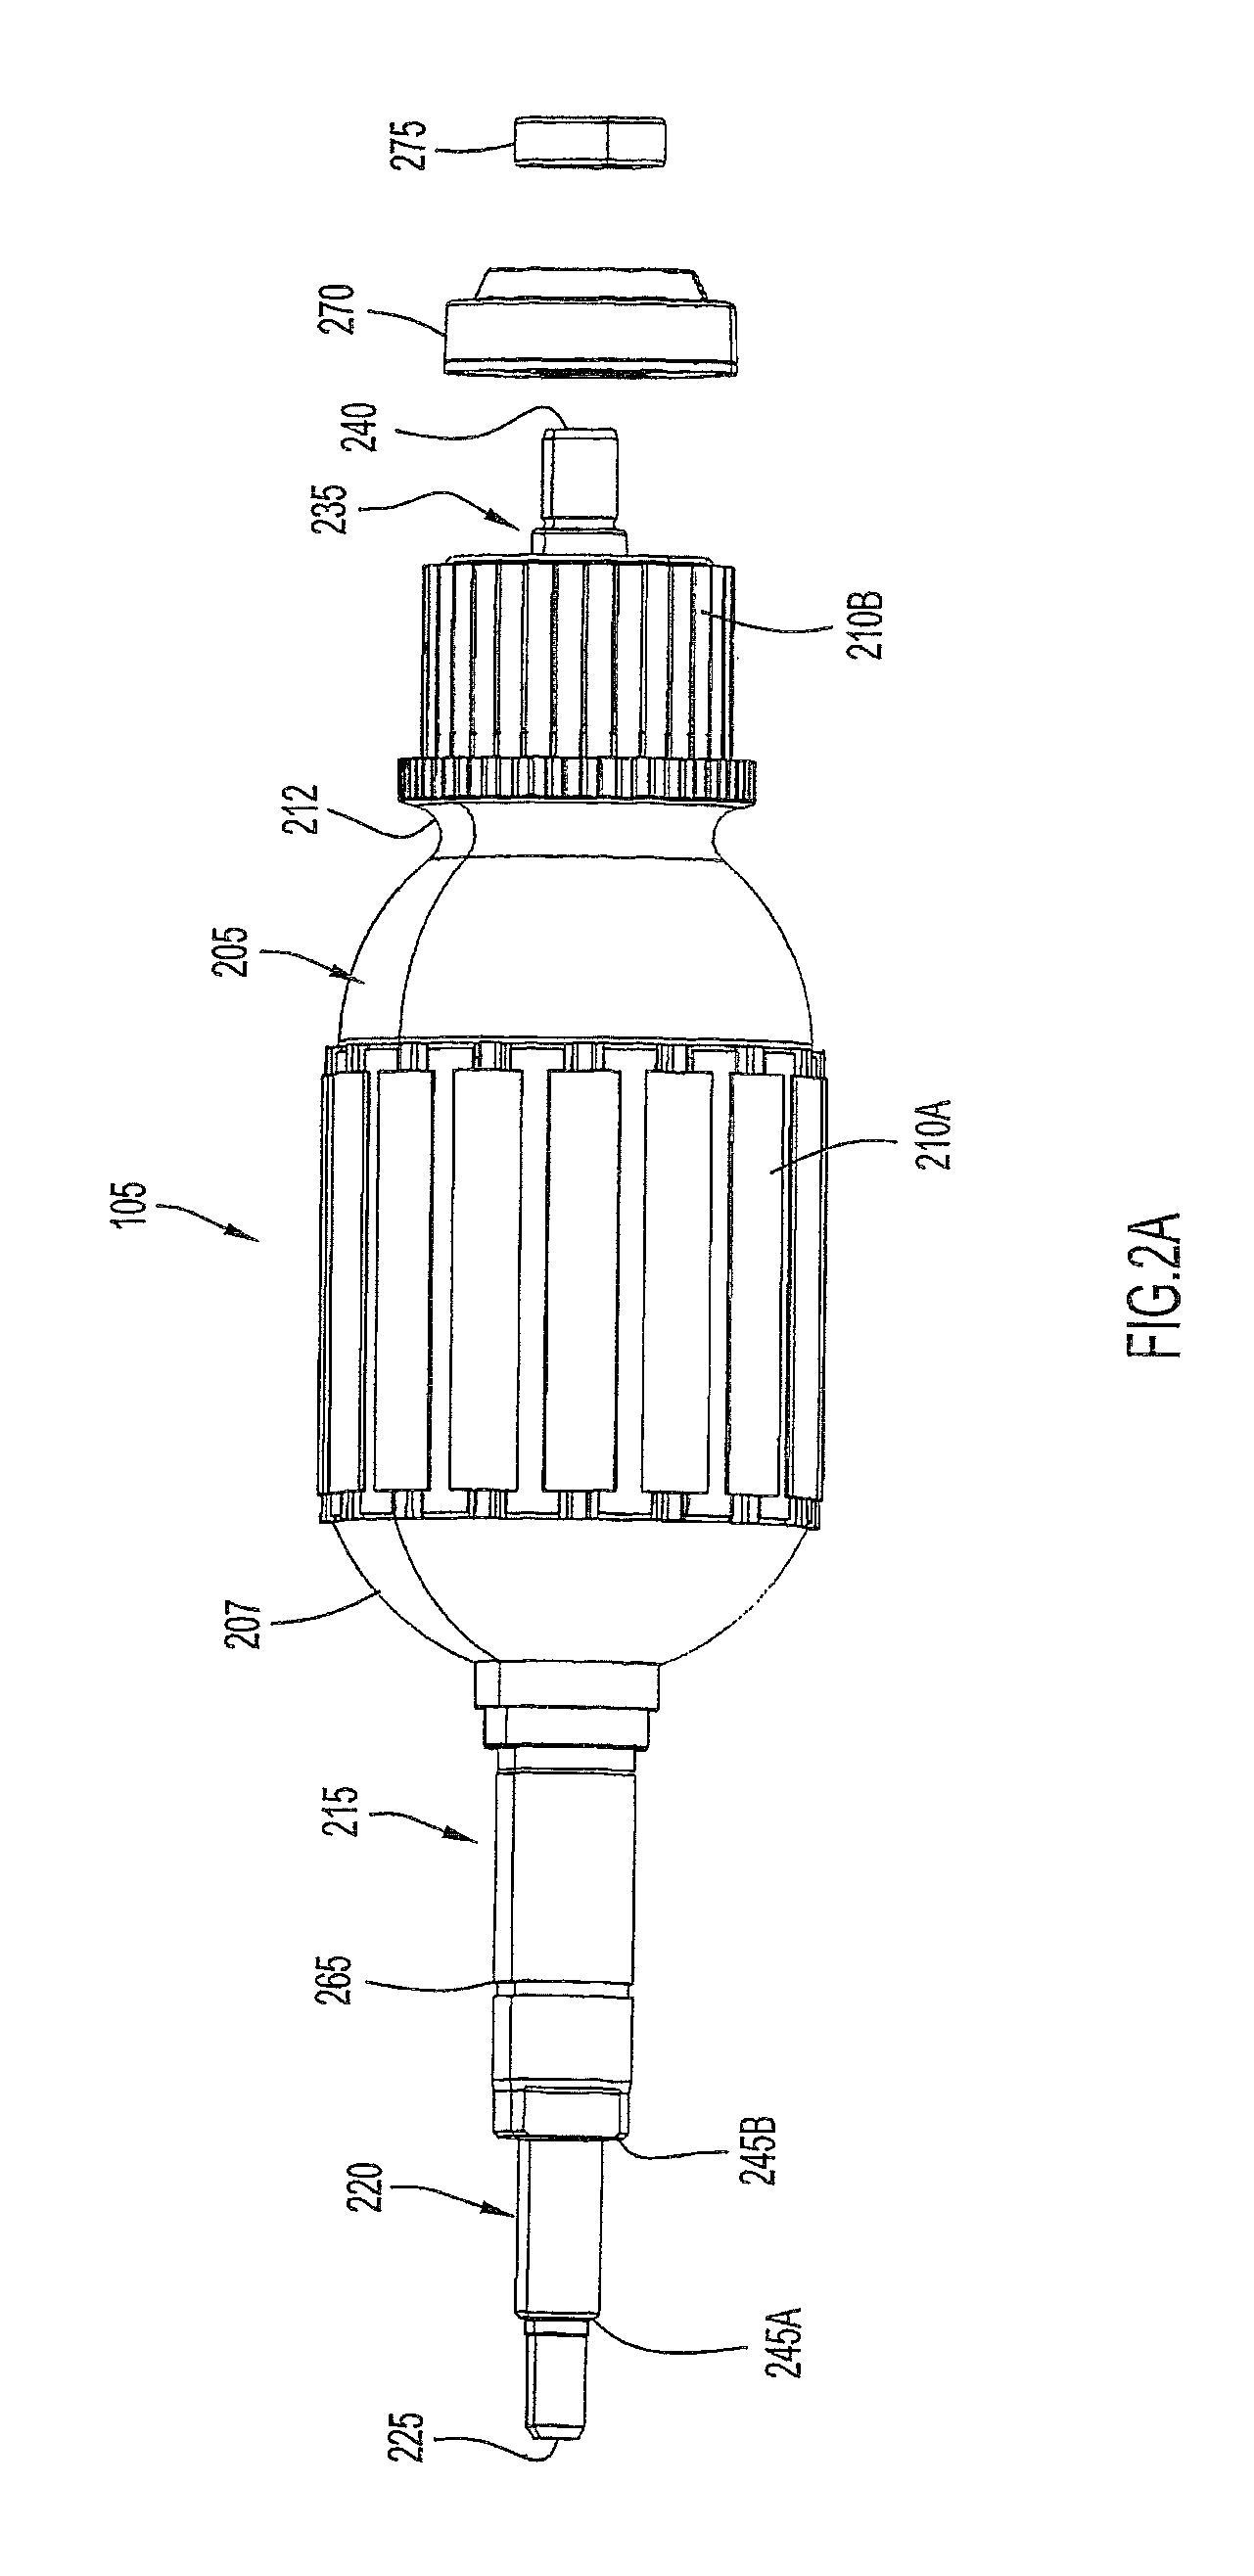 Airflow arrangement for a power tool